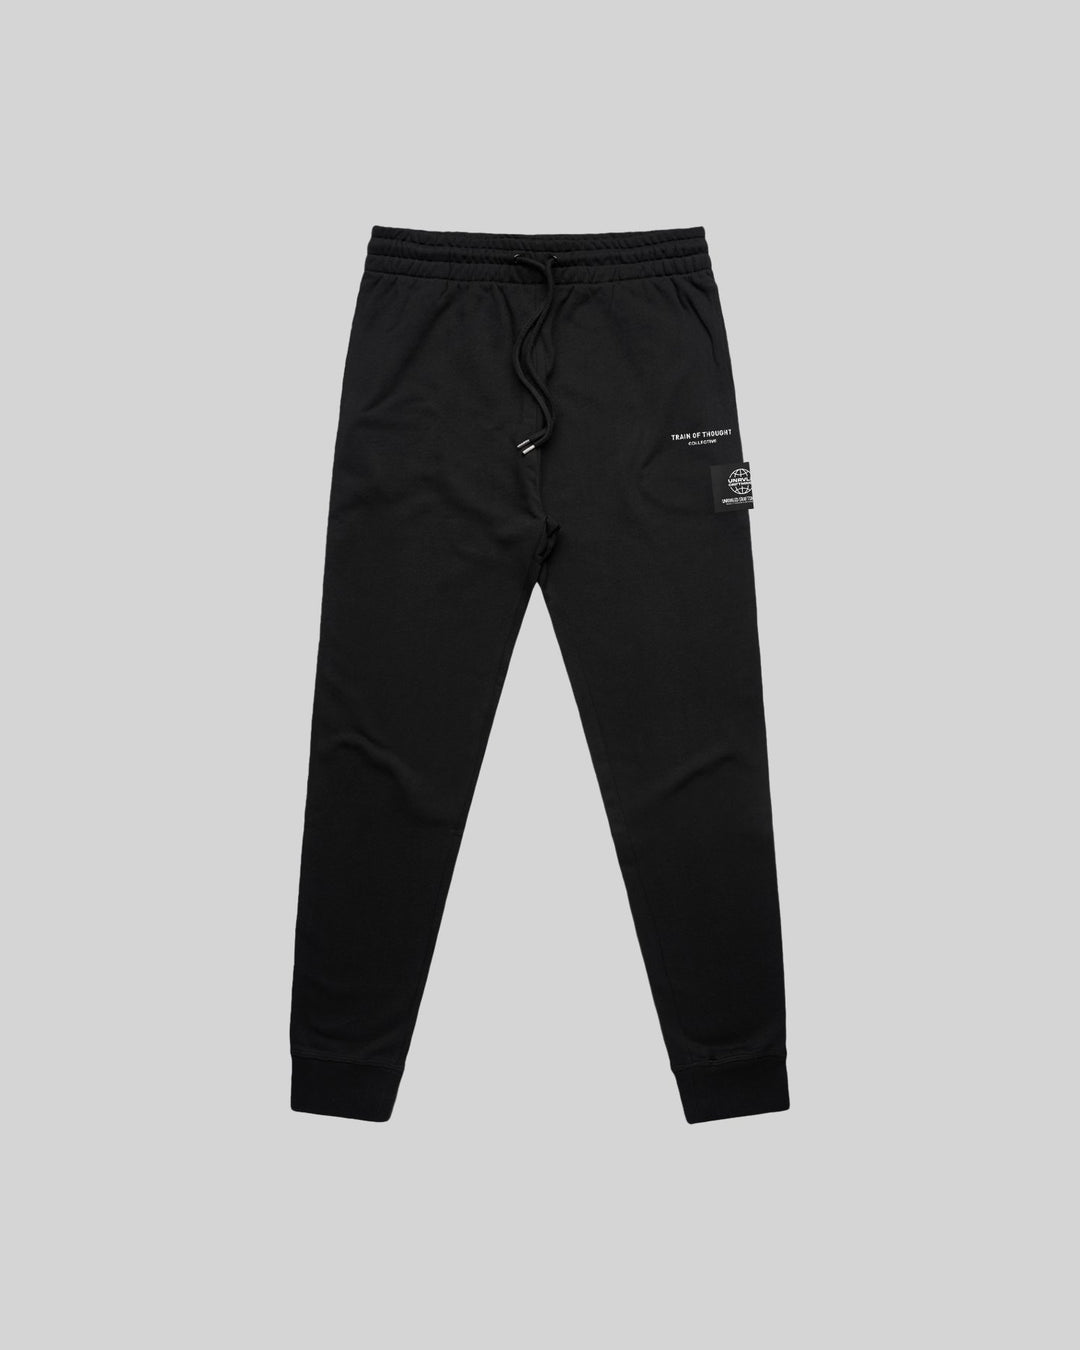 Relentless Premium Black Sweatpants - trainofthoughtcollective